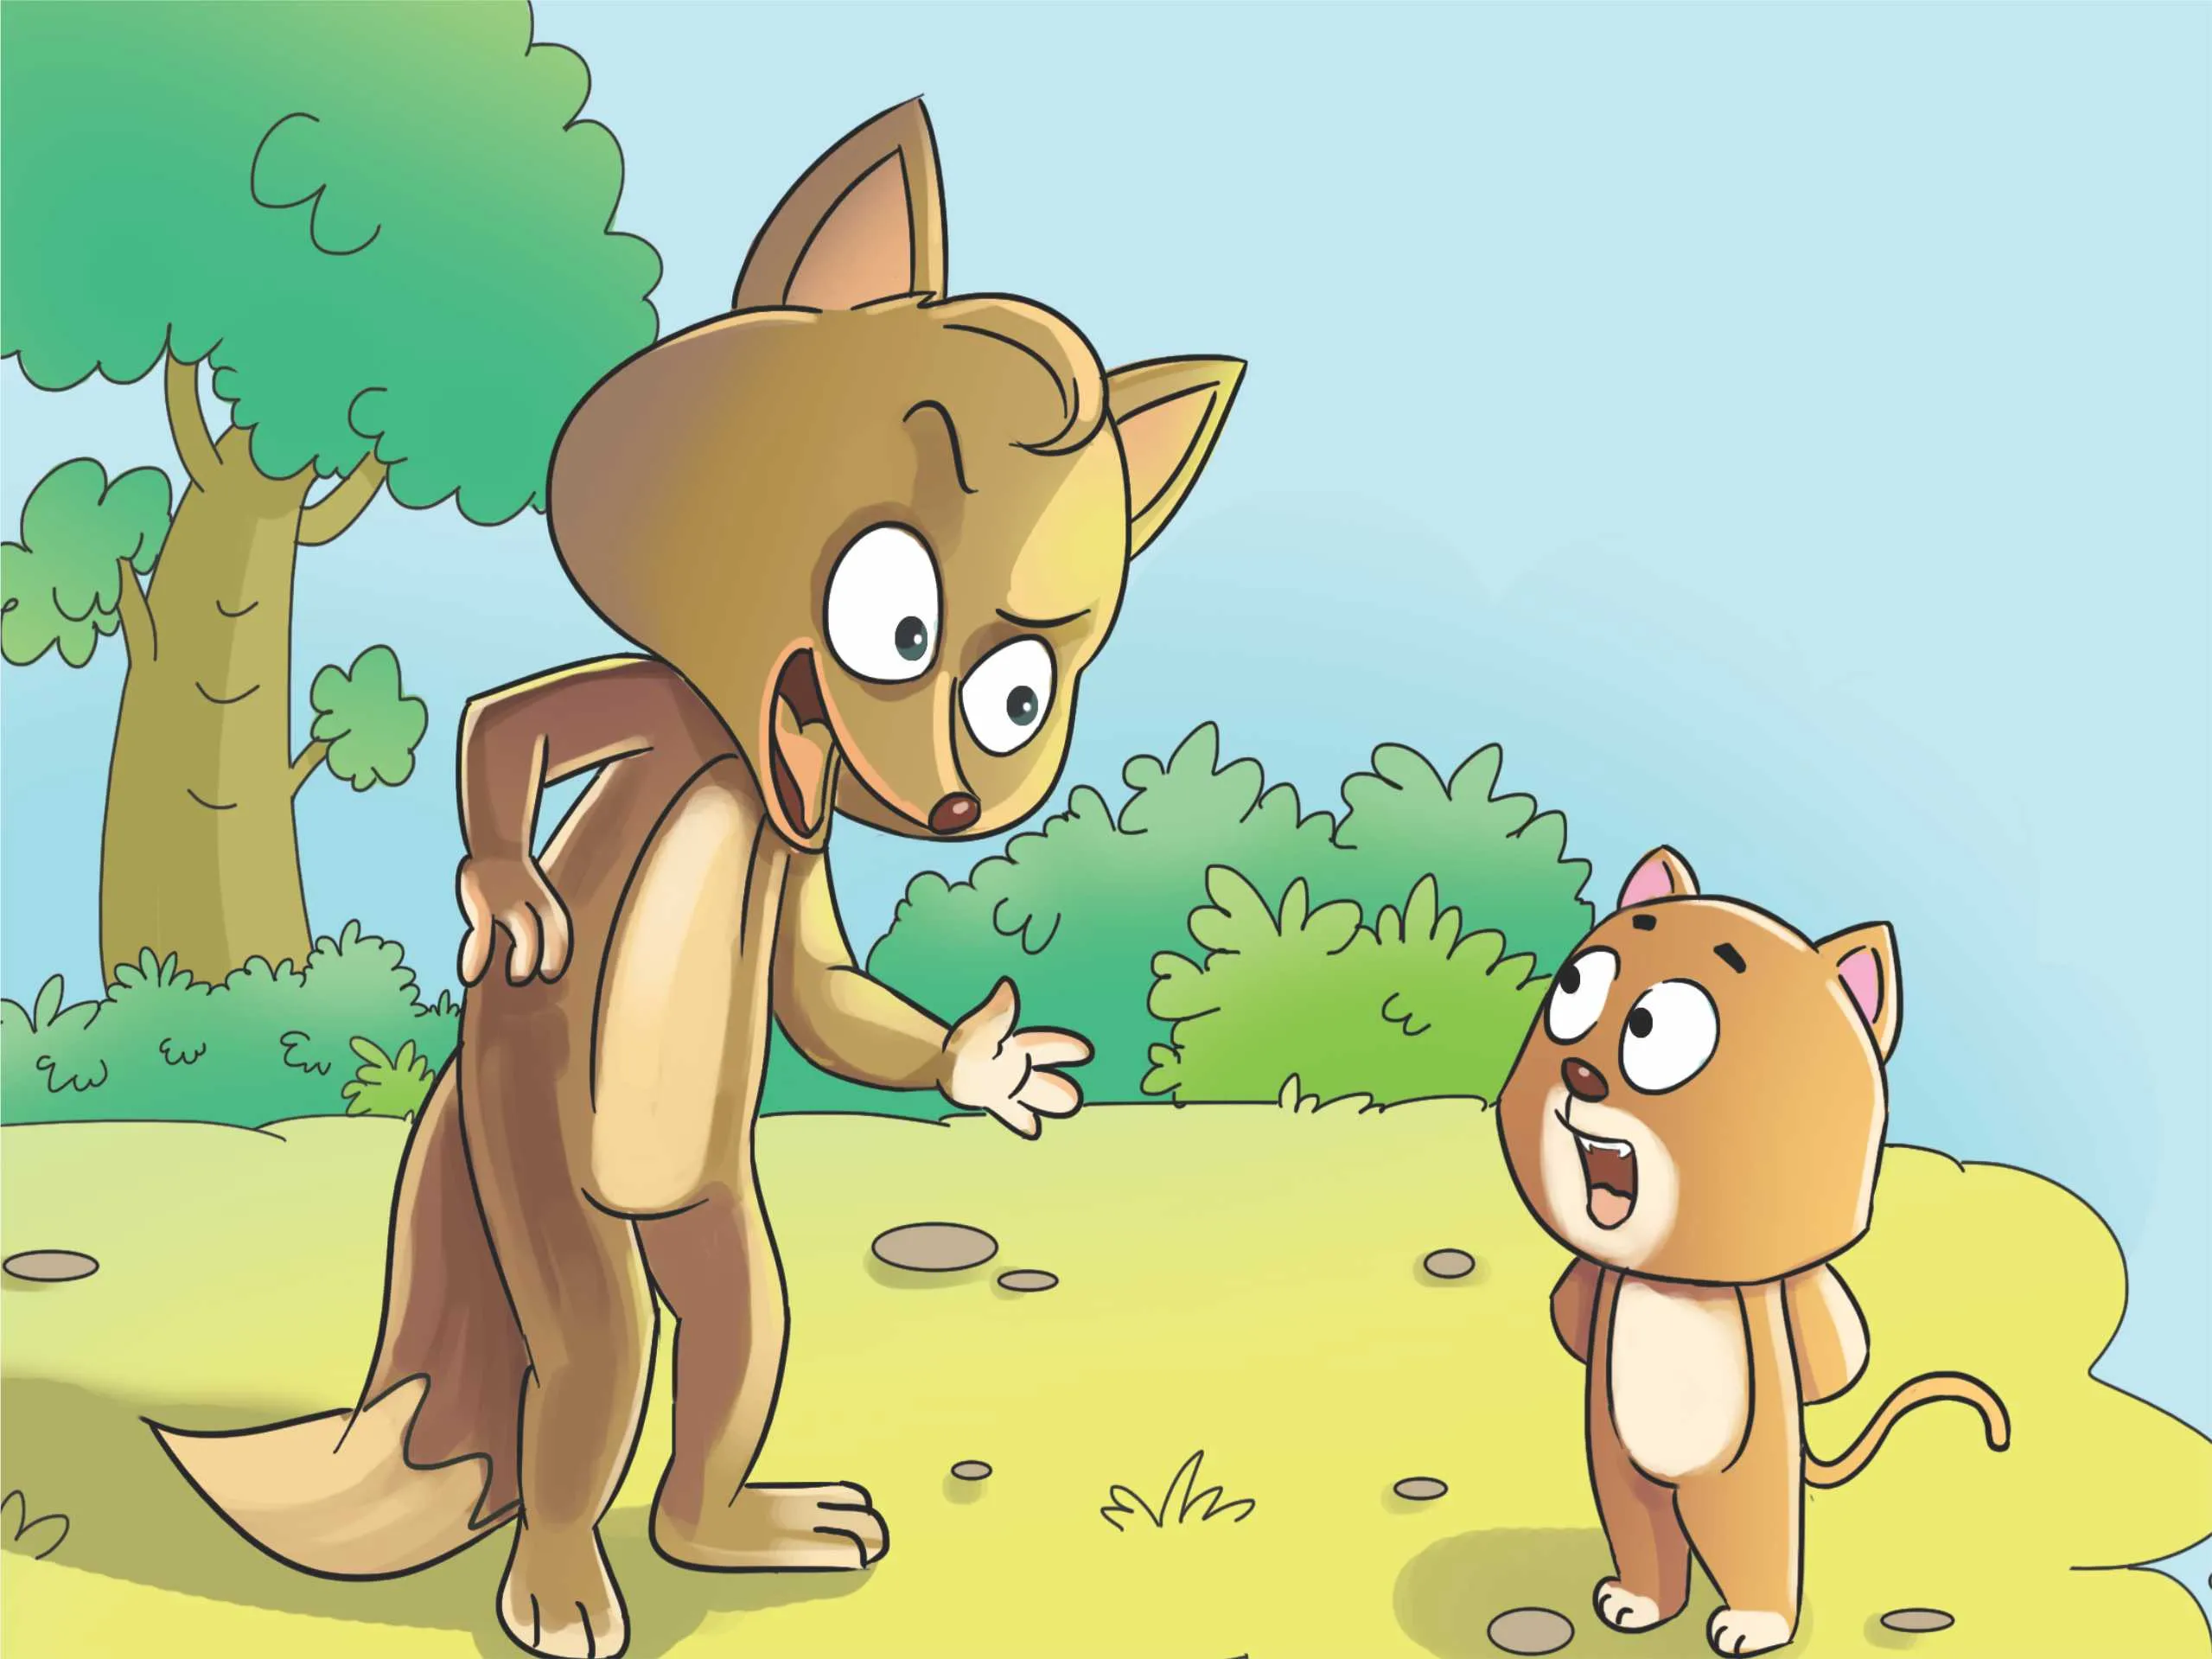 jackal and cub cartoon image